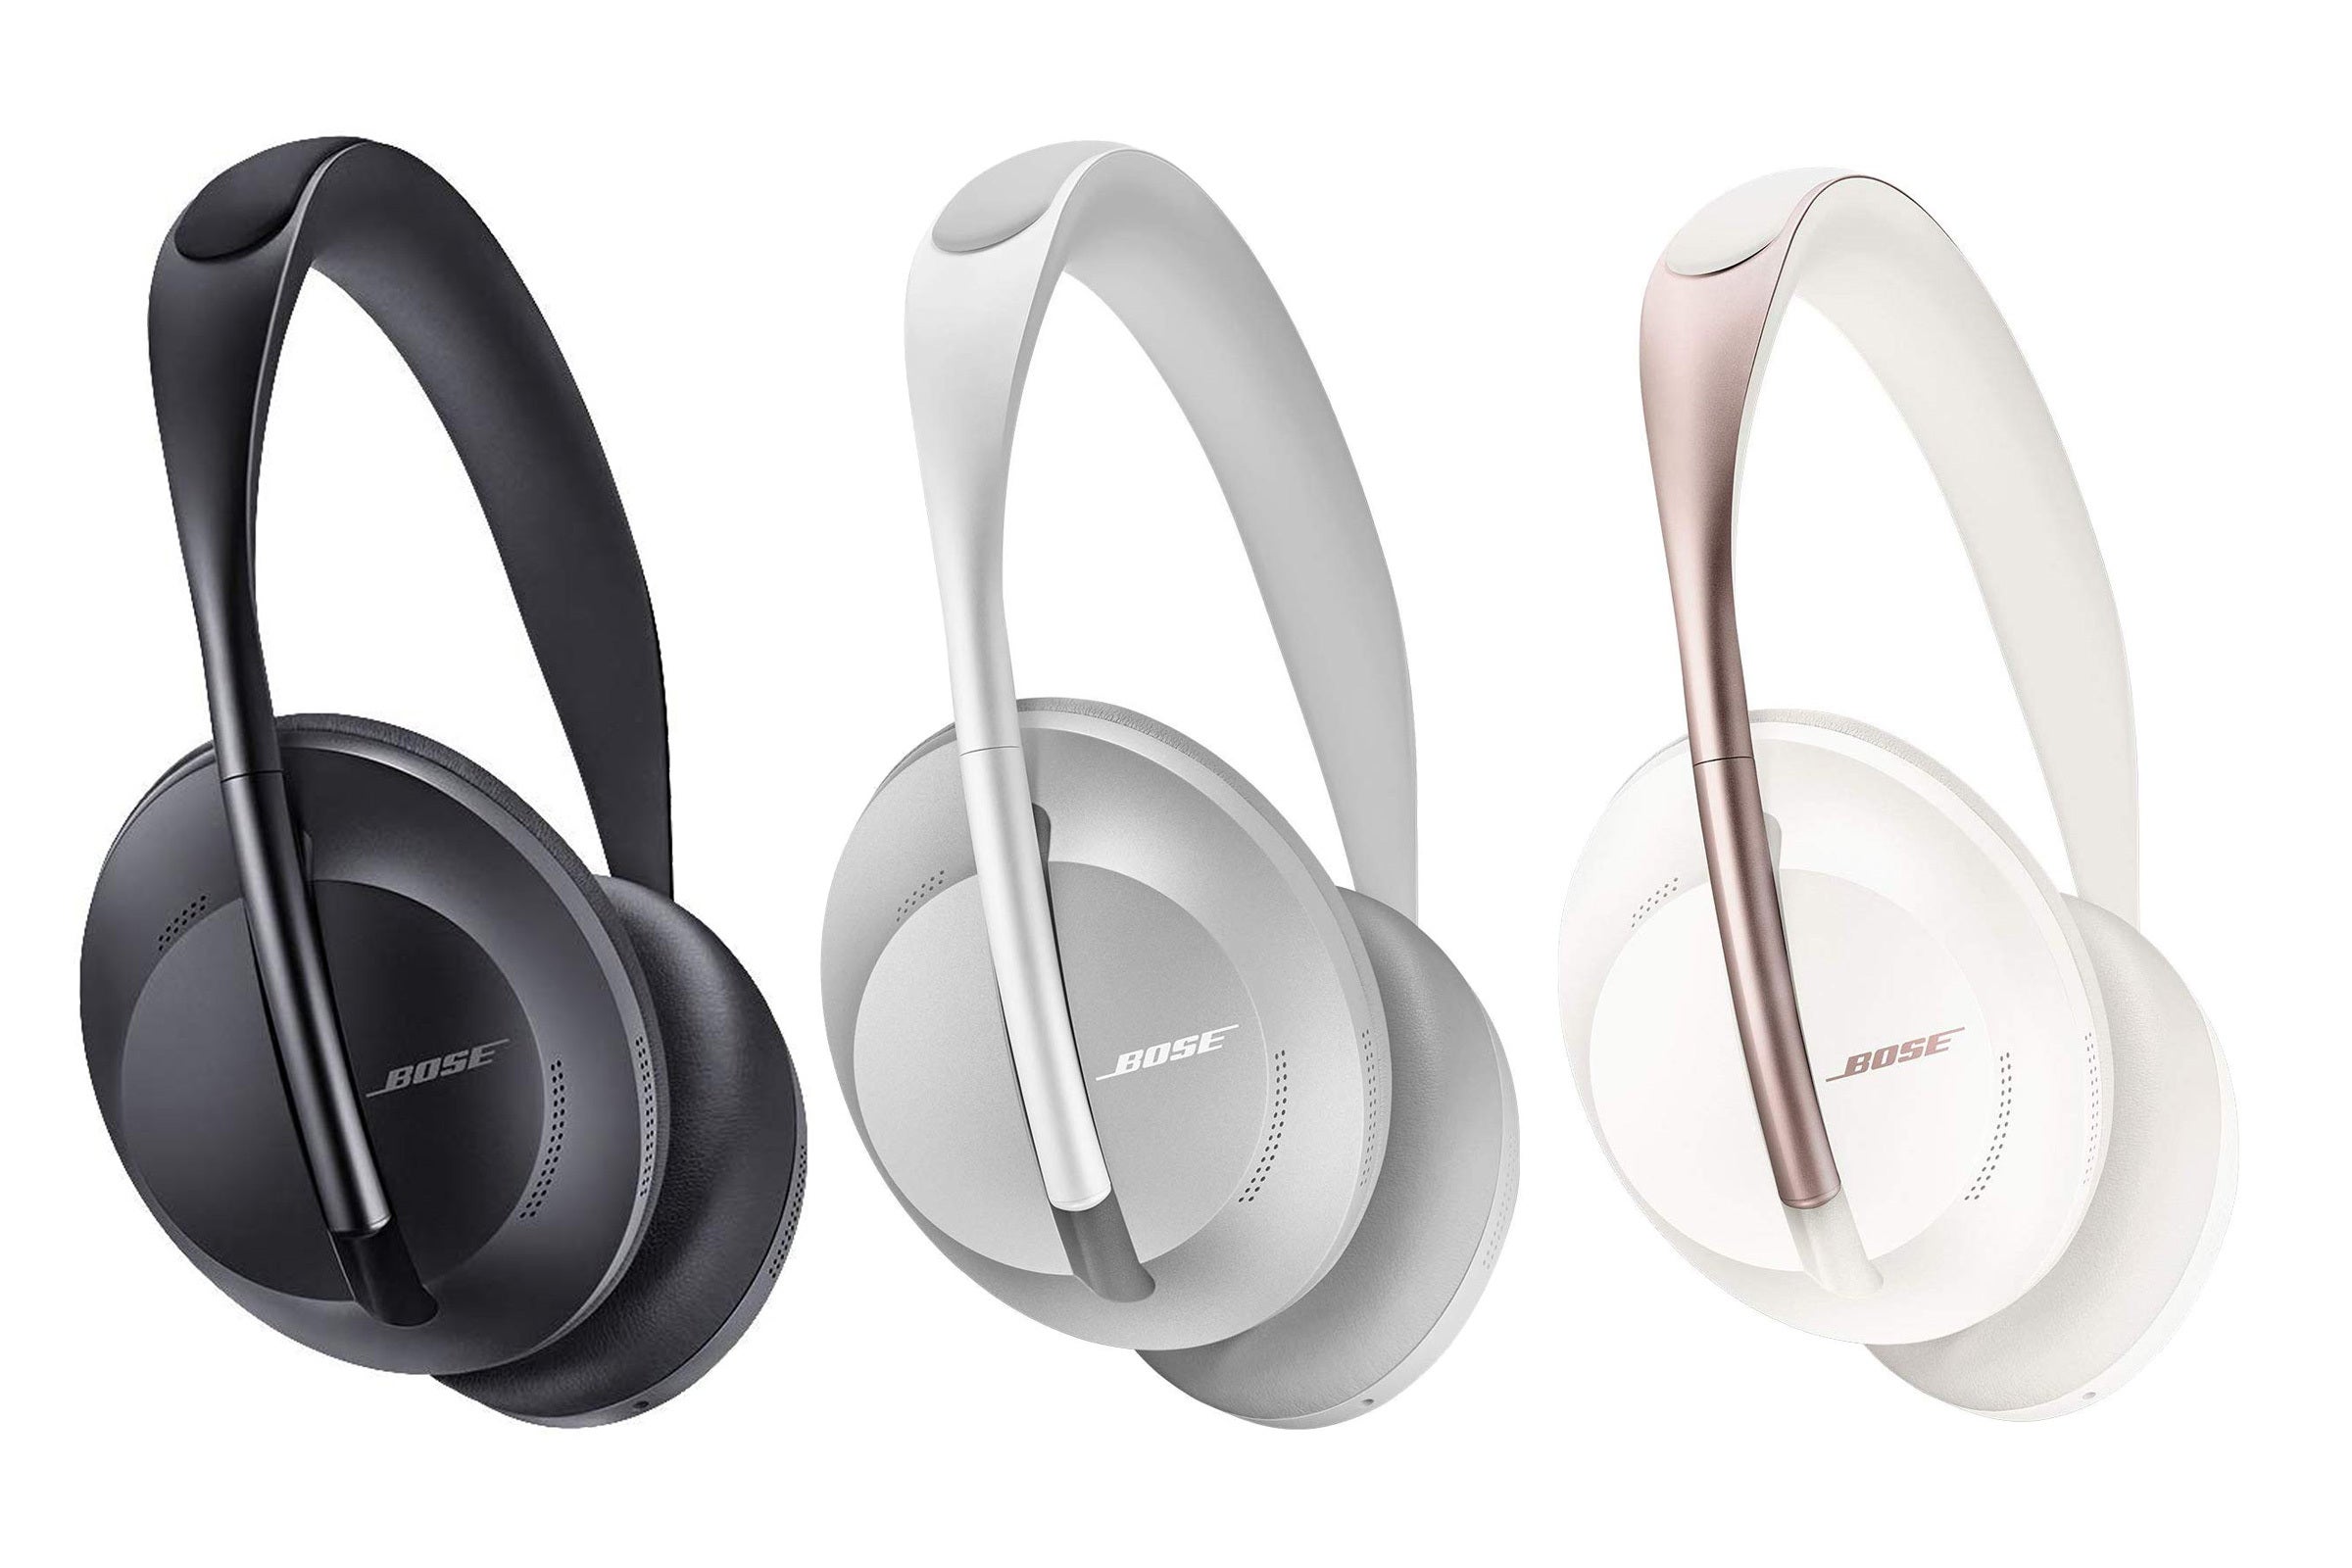 Bose 700 noise cancelling headphones - Apple planning BeatsX-like AirPods X, $350 premium Bose headphones rival